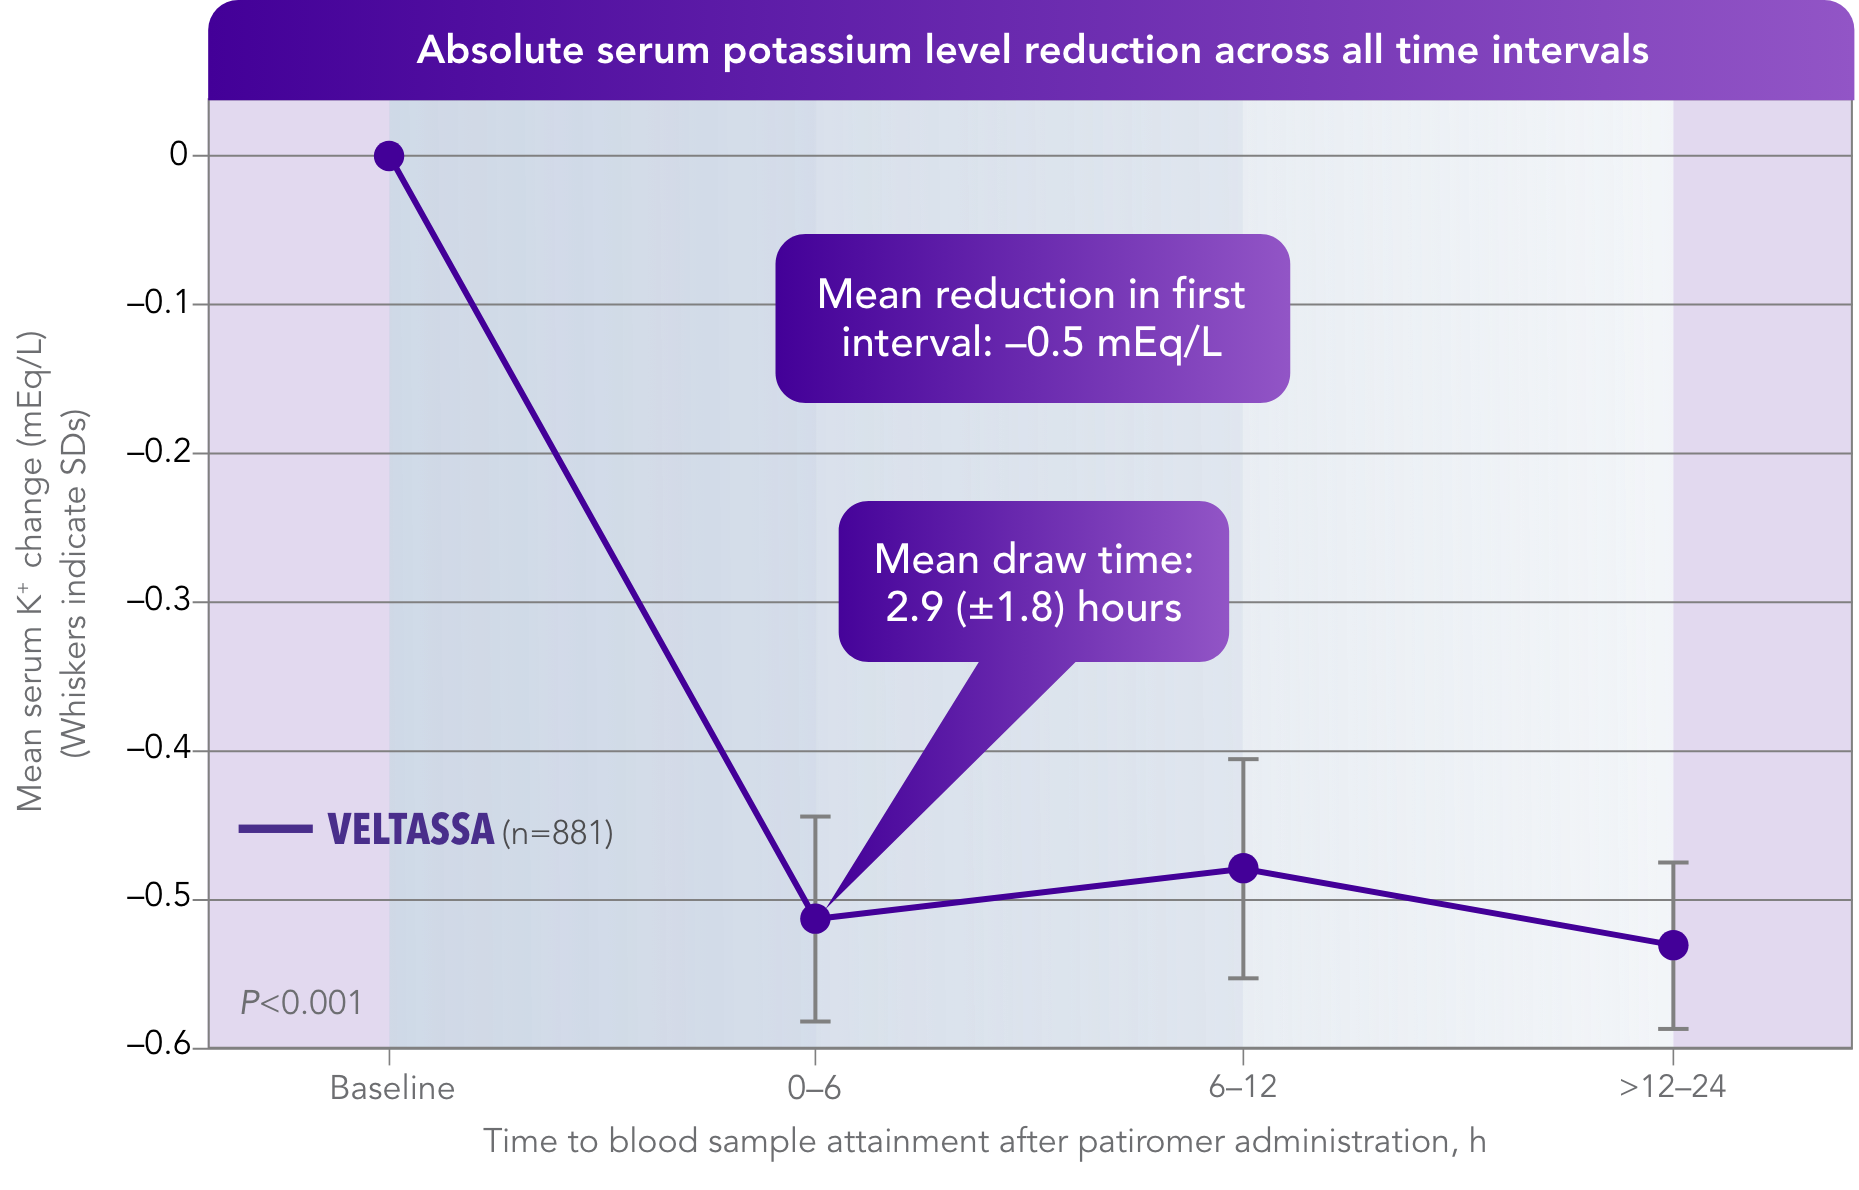 A real-world analysis showed VELTASSA reduced serum potassium 0.5 milliequivalents per liter (mean) at 2.9 hours (mean).